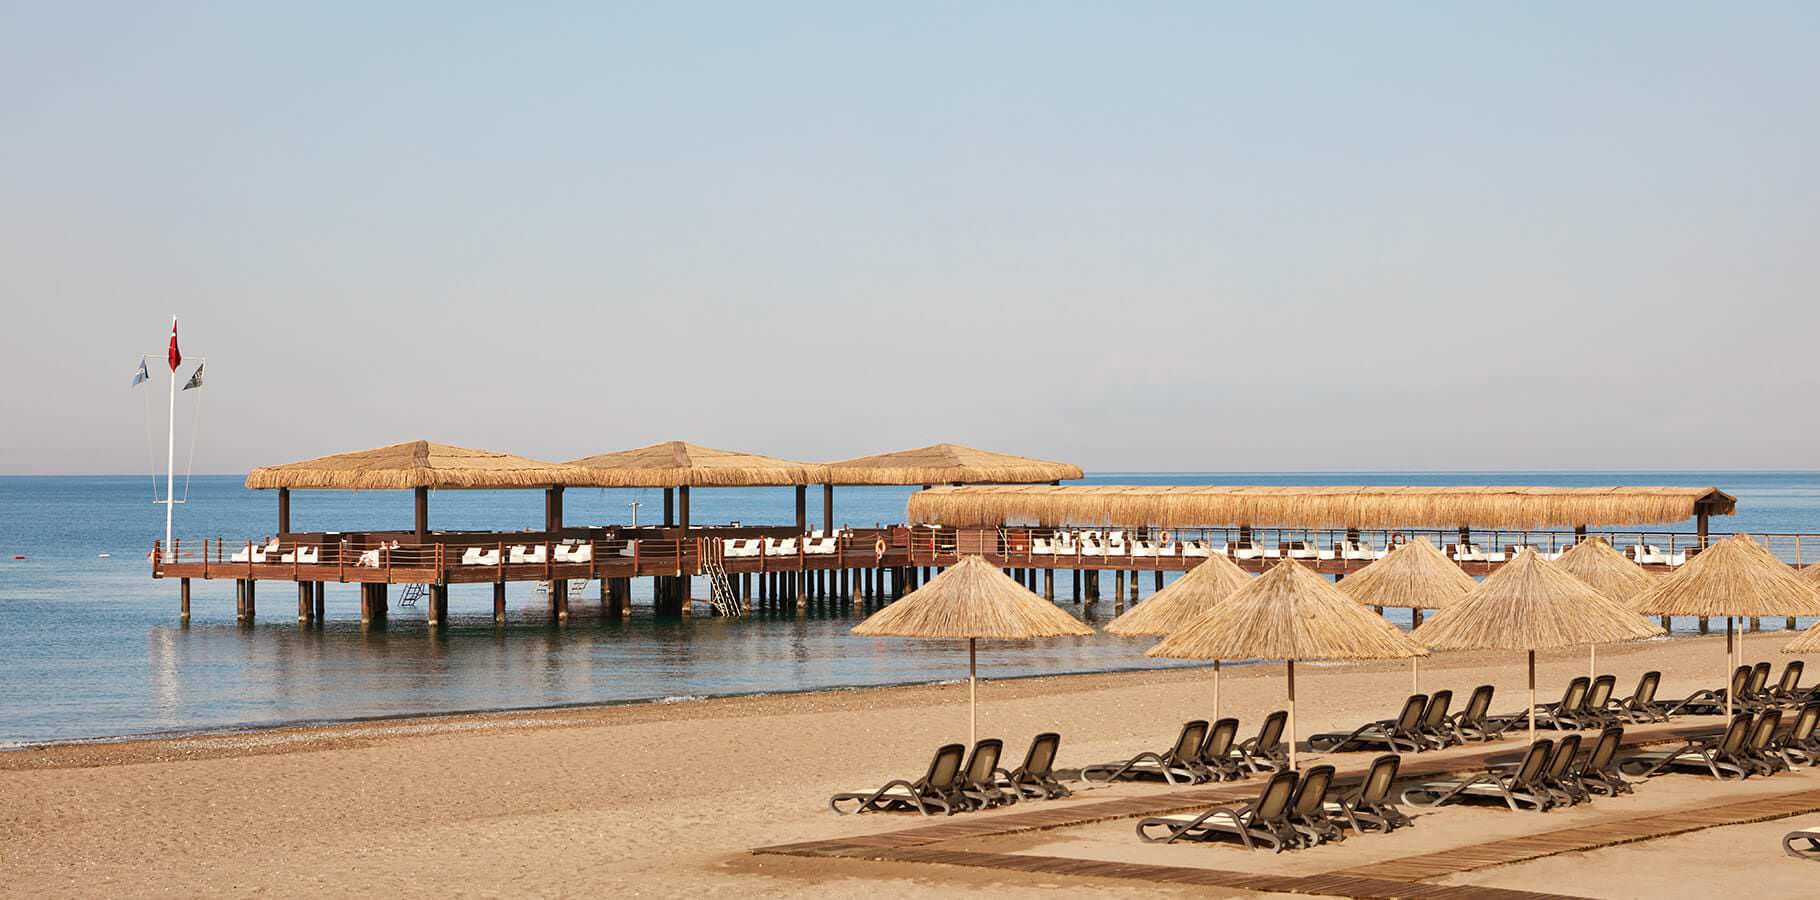 Gloria Serenity Resort Beach Sunbeds and Pier